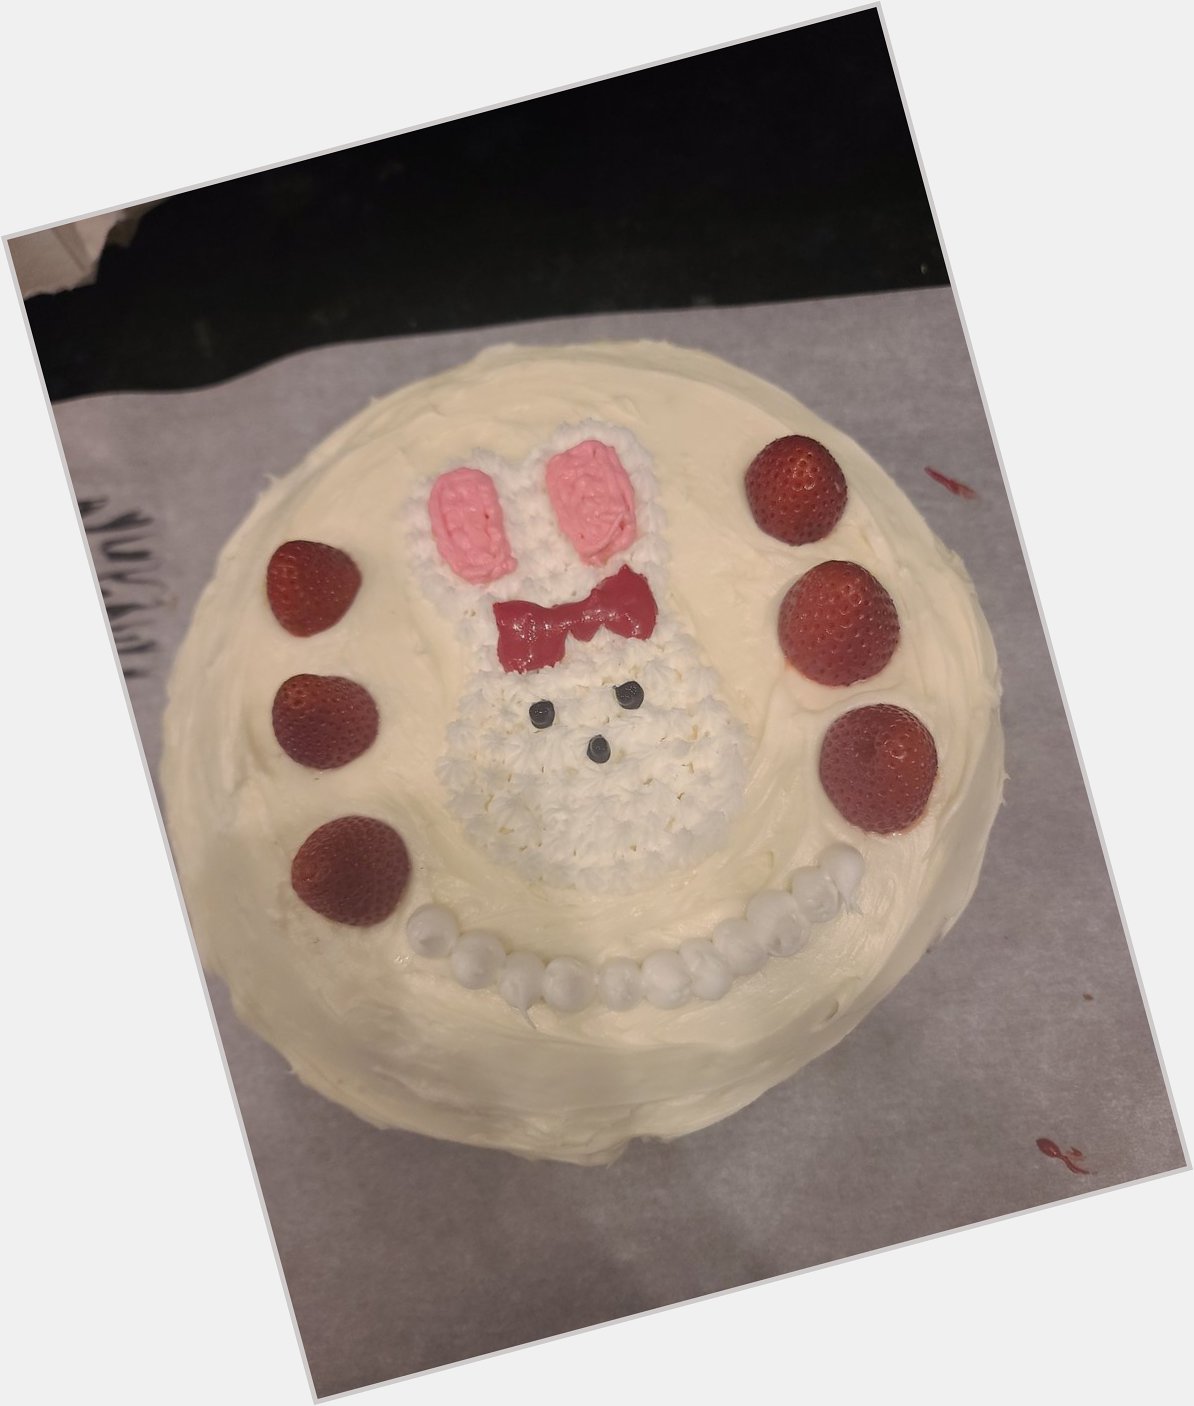 Happy Birthday Lauren Tom I made this rabbit shortcake for your birthday!! 